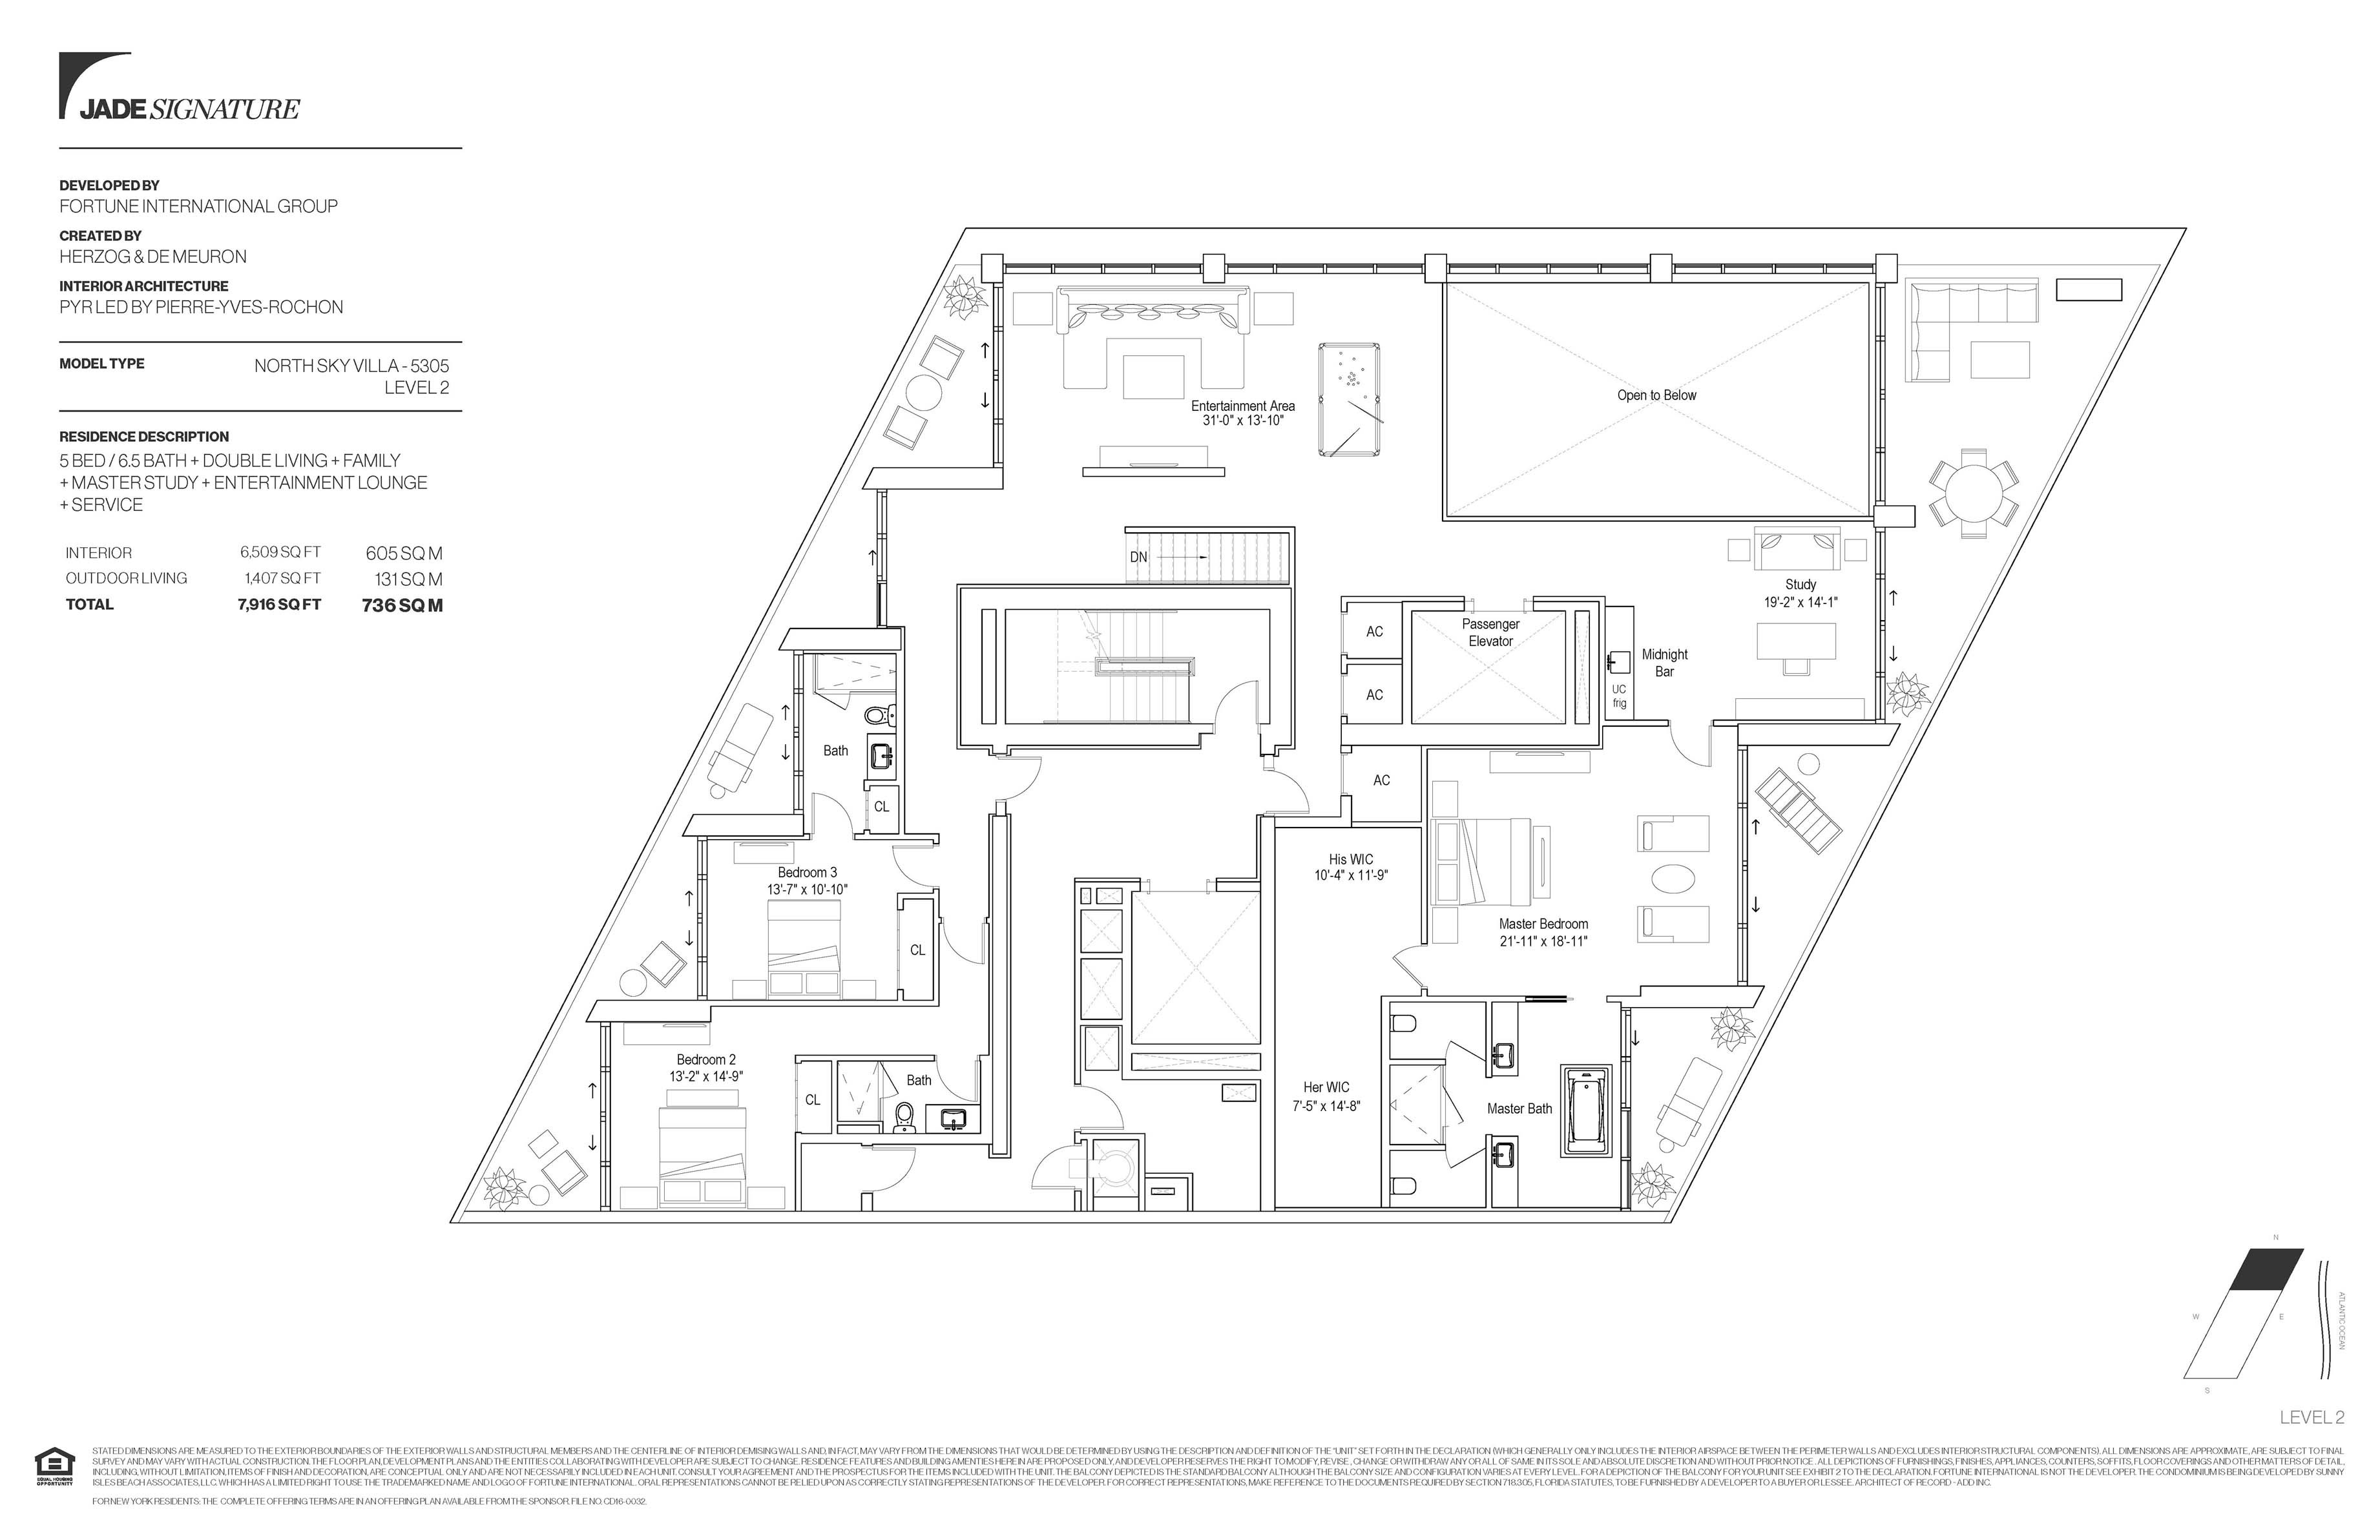 Floor Plan for Jade Signature Sunny Isles Floorplans, North Sky Villa 5305